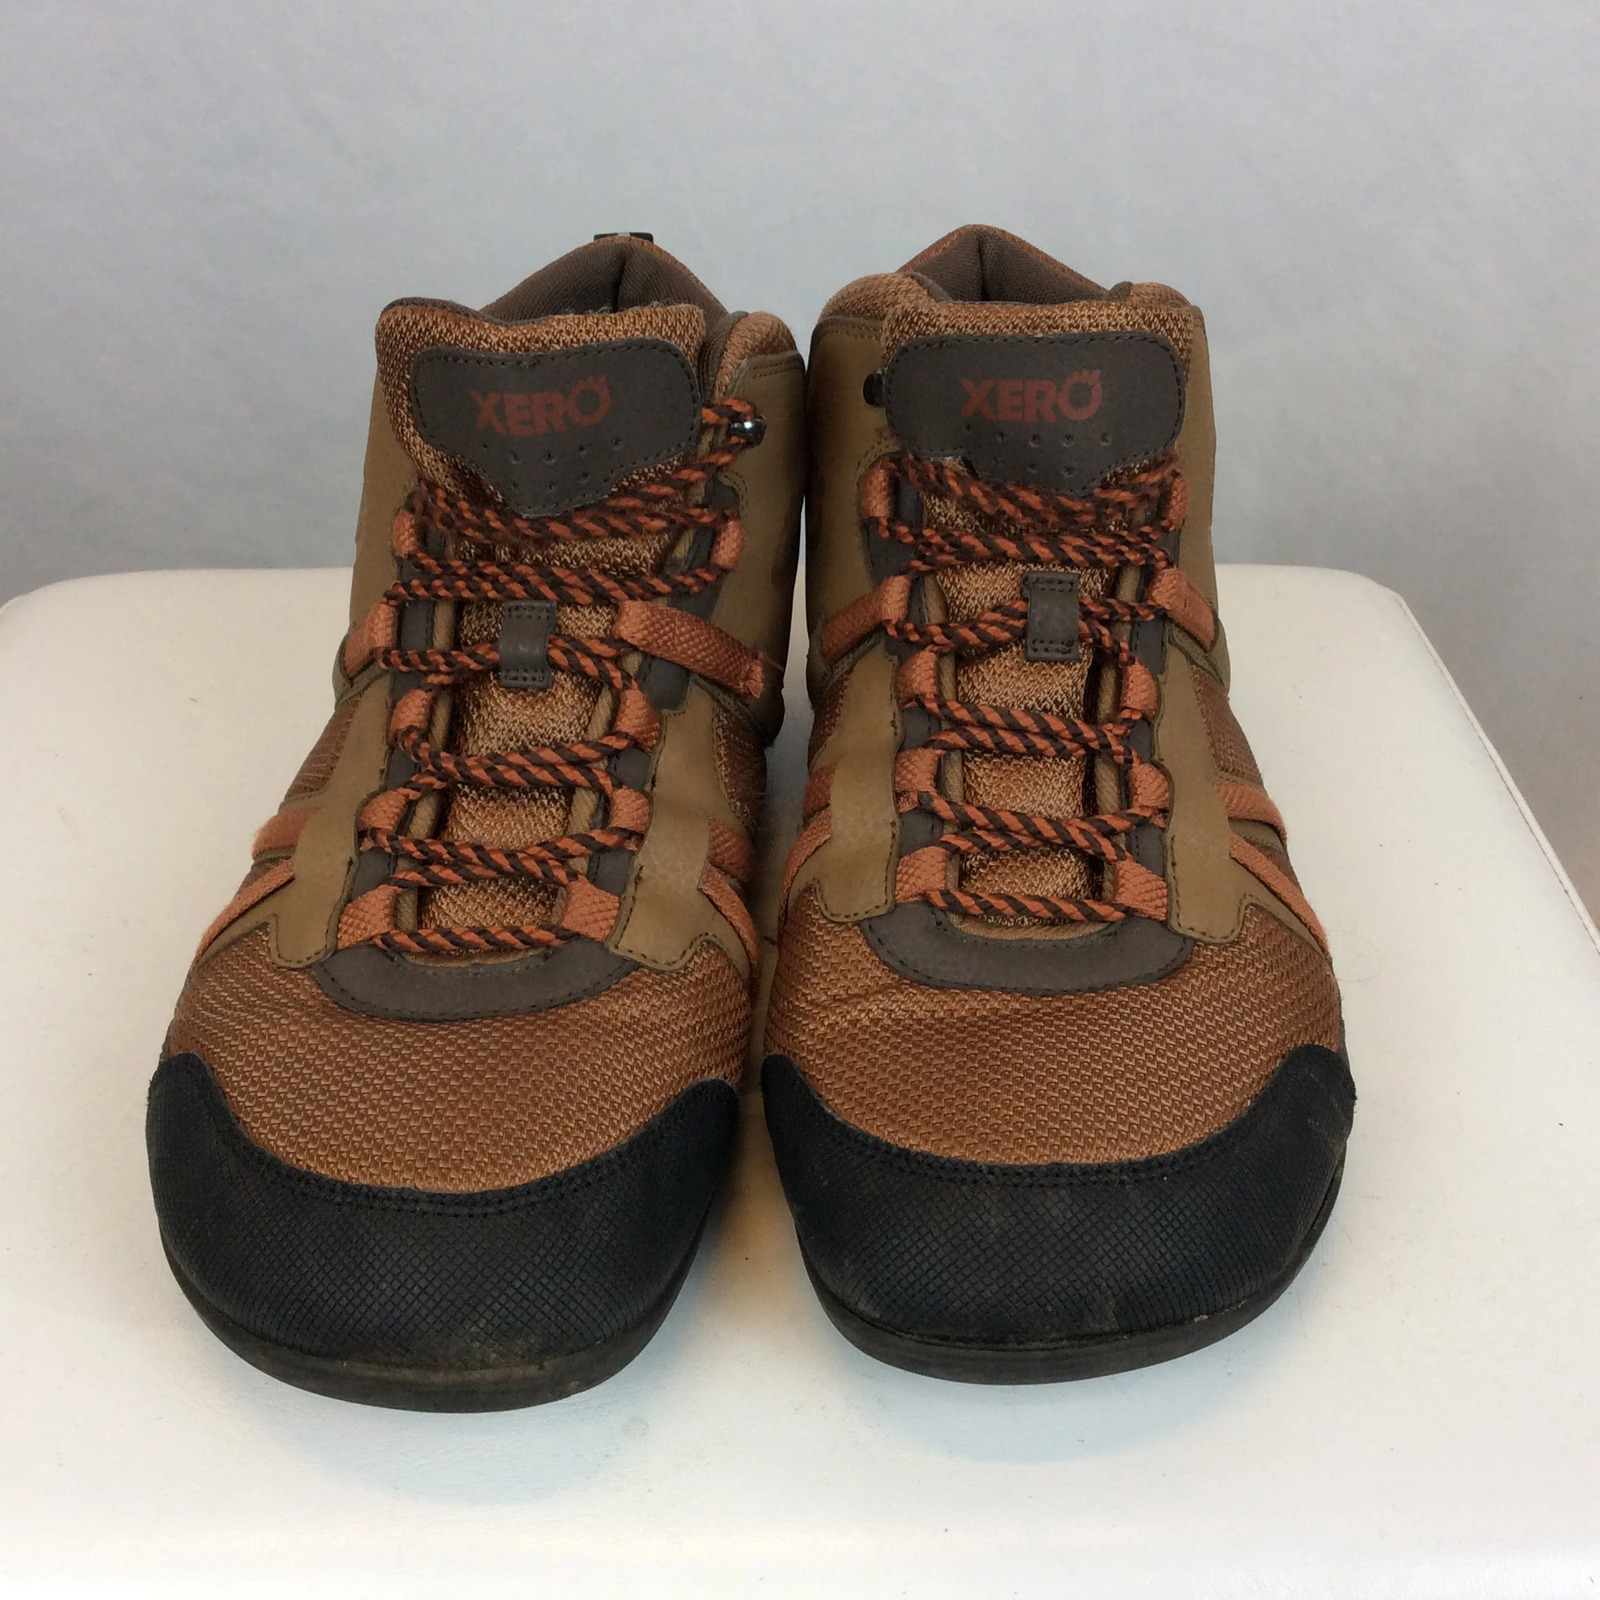 Xero Brown "Daylite Hiker" Hiking Boots | 14